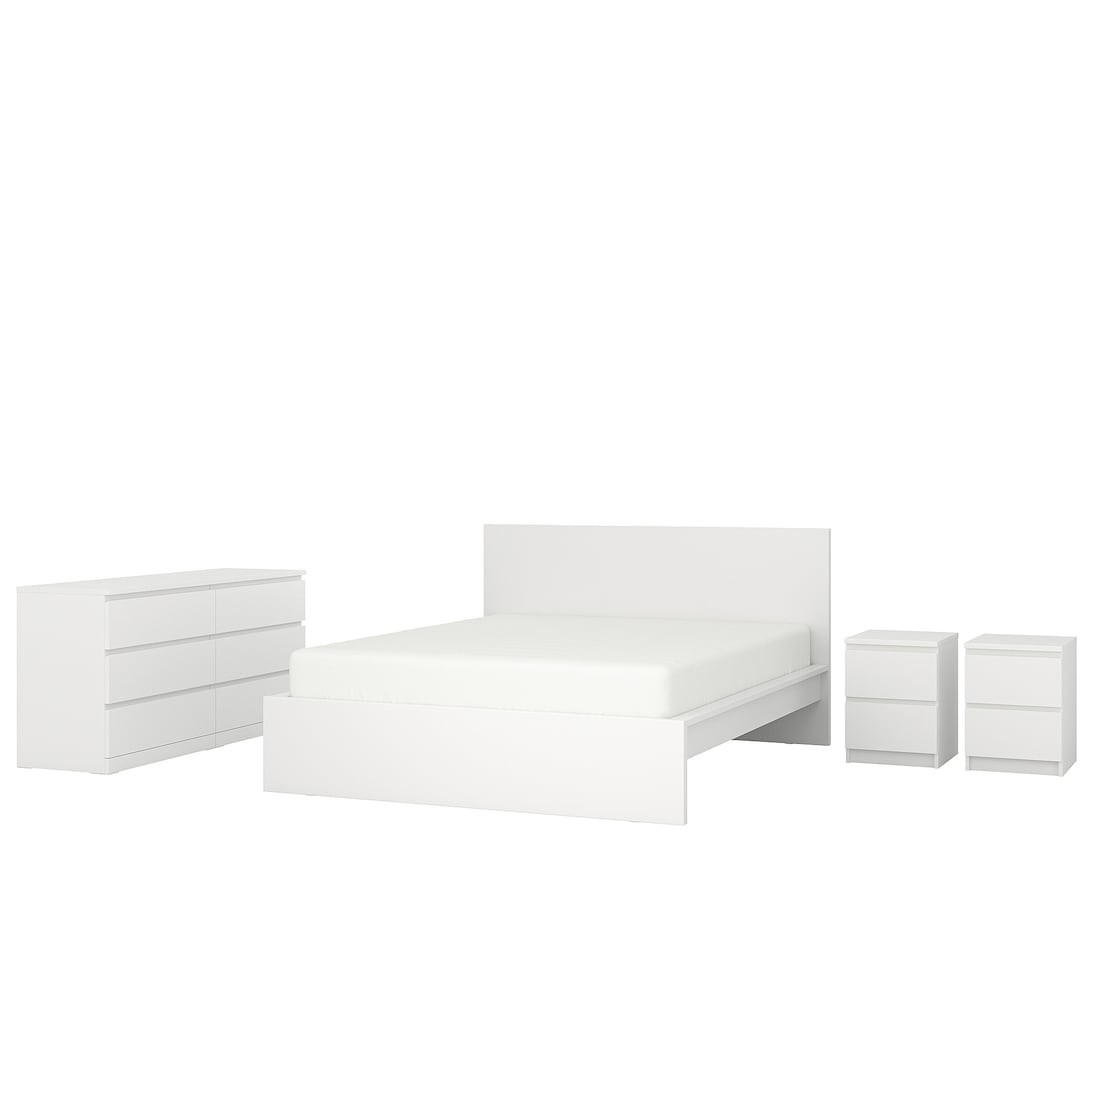 IKEA MALM МАЛЬМ Набор мебели для спальни 4 шт, белый, 160x200 см 99495158 | 994.951.58